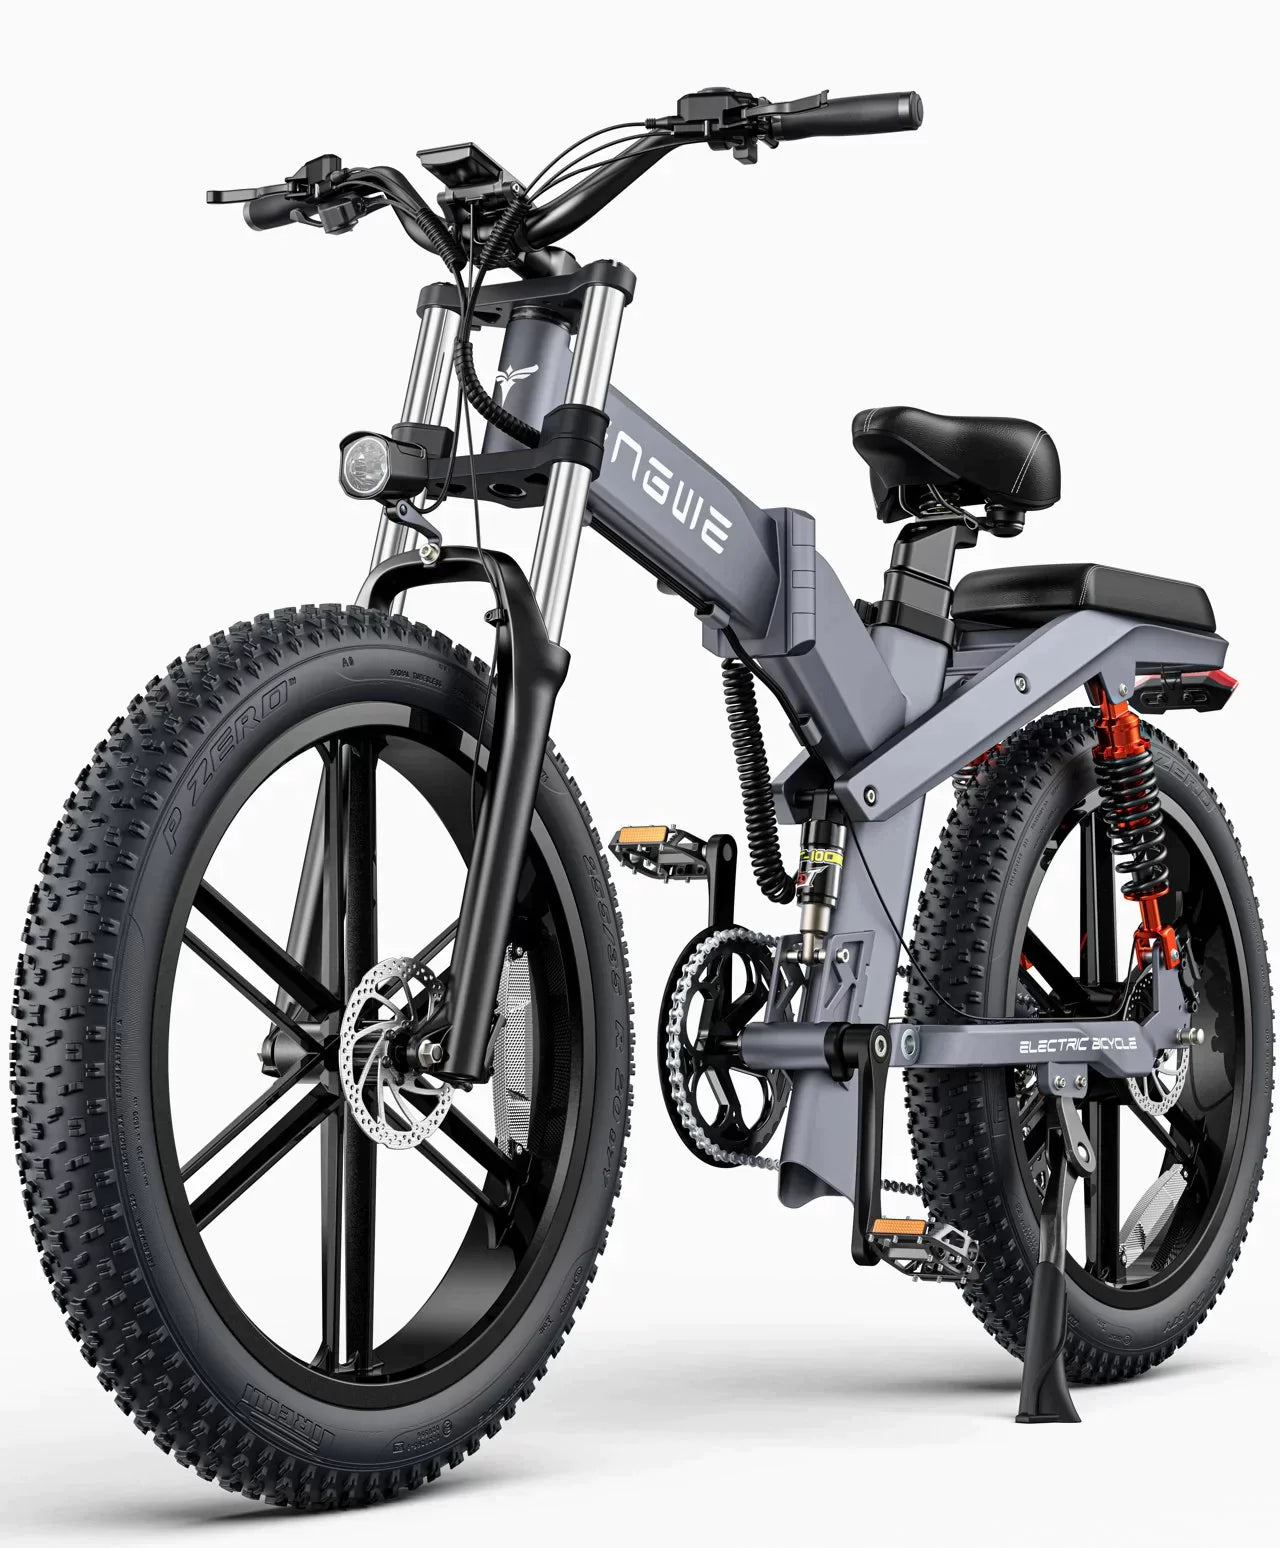 ENGWE X26 All-Terrain E-Bike (Free Helmet, Mudguards & Light)